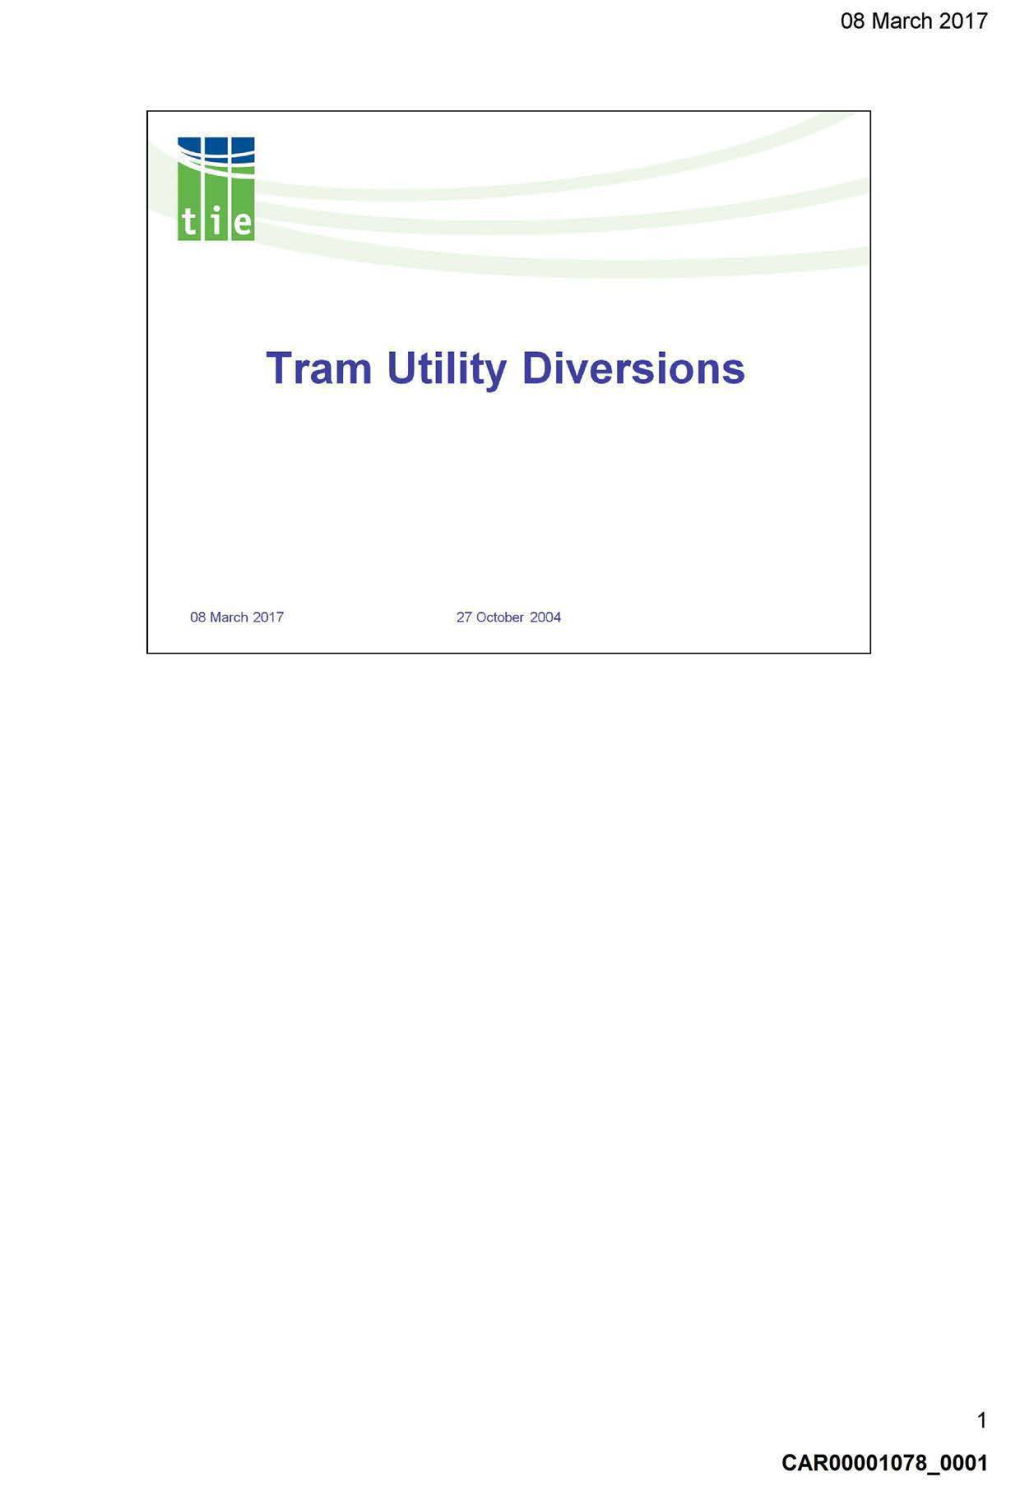 Tram Utility Diversions